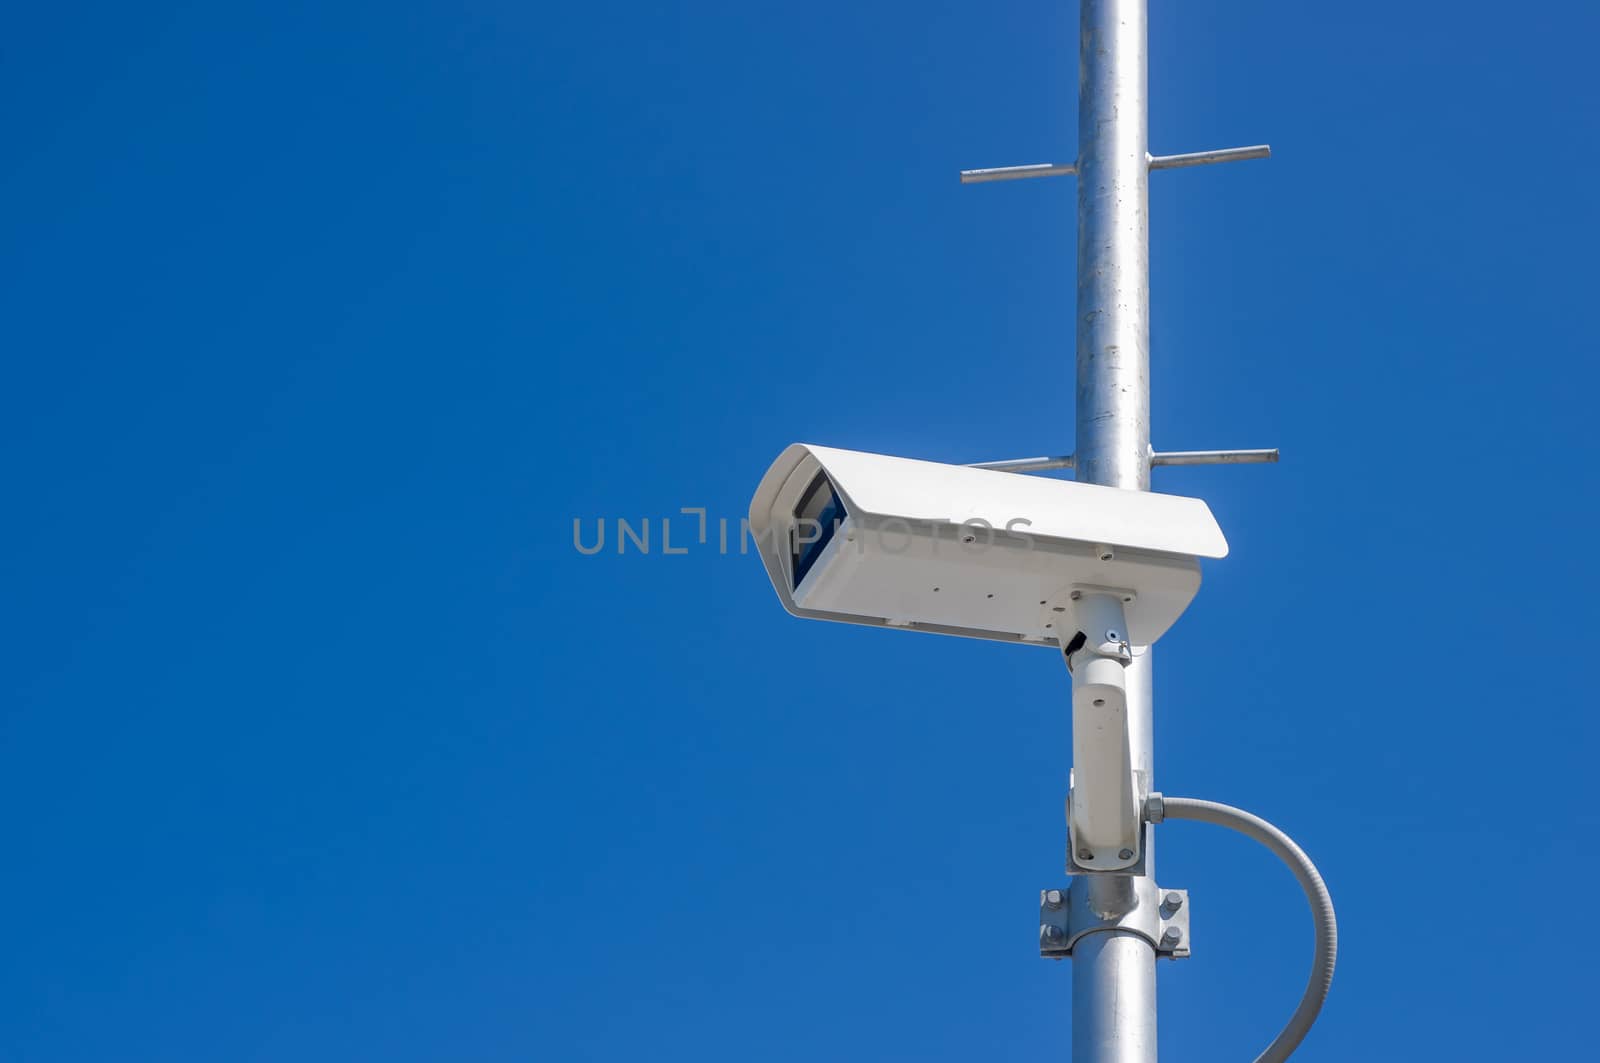 Security camera with blue sky